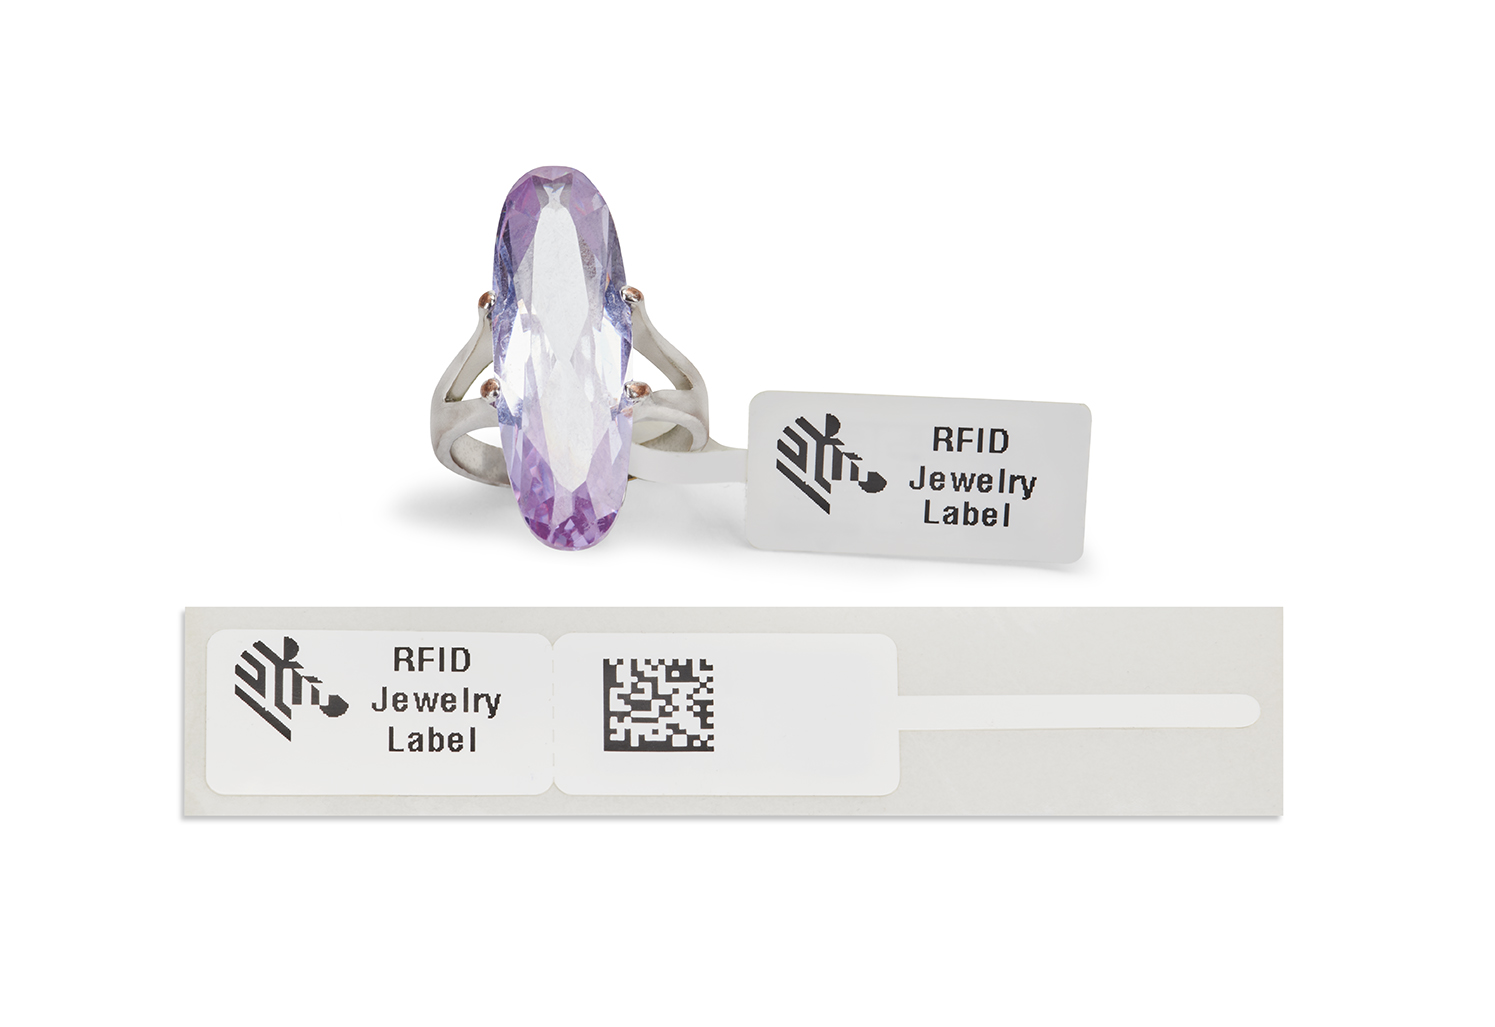 RFID label on jewelry